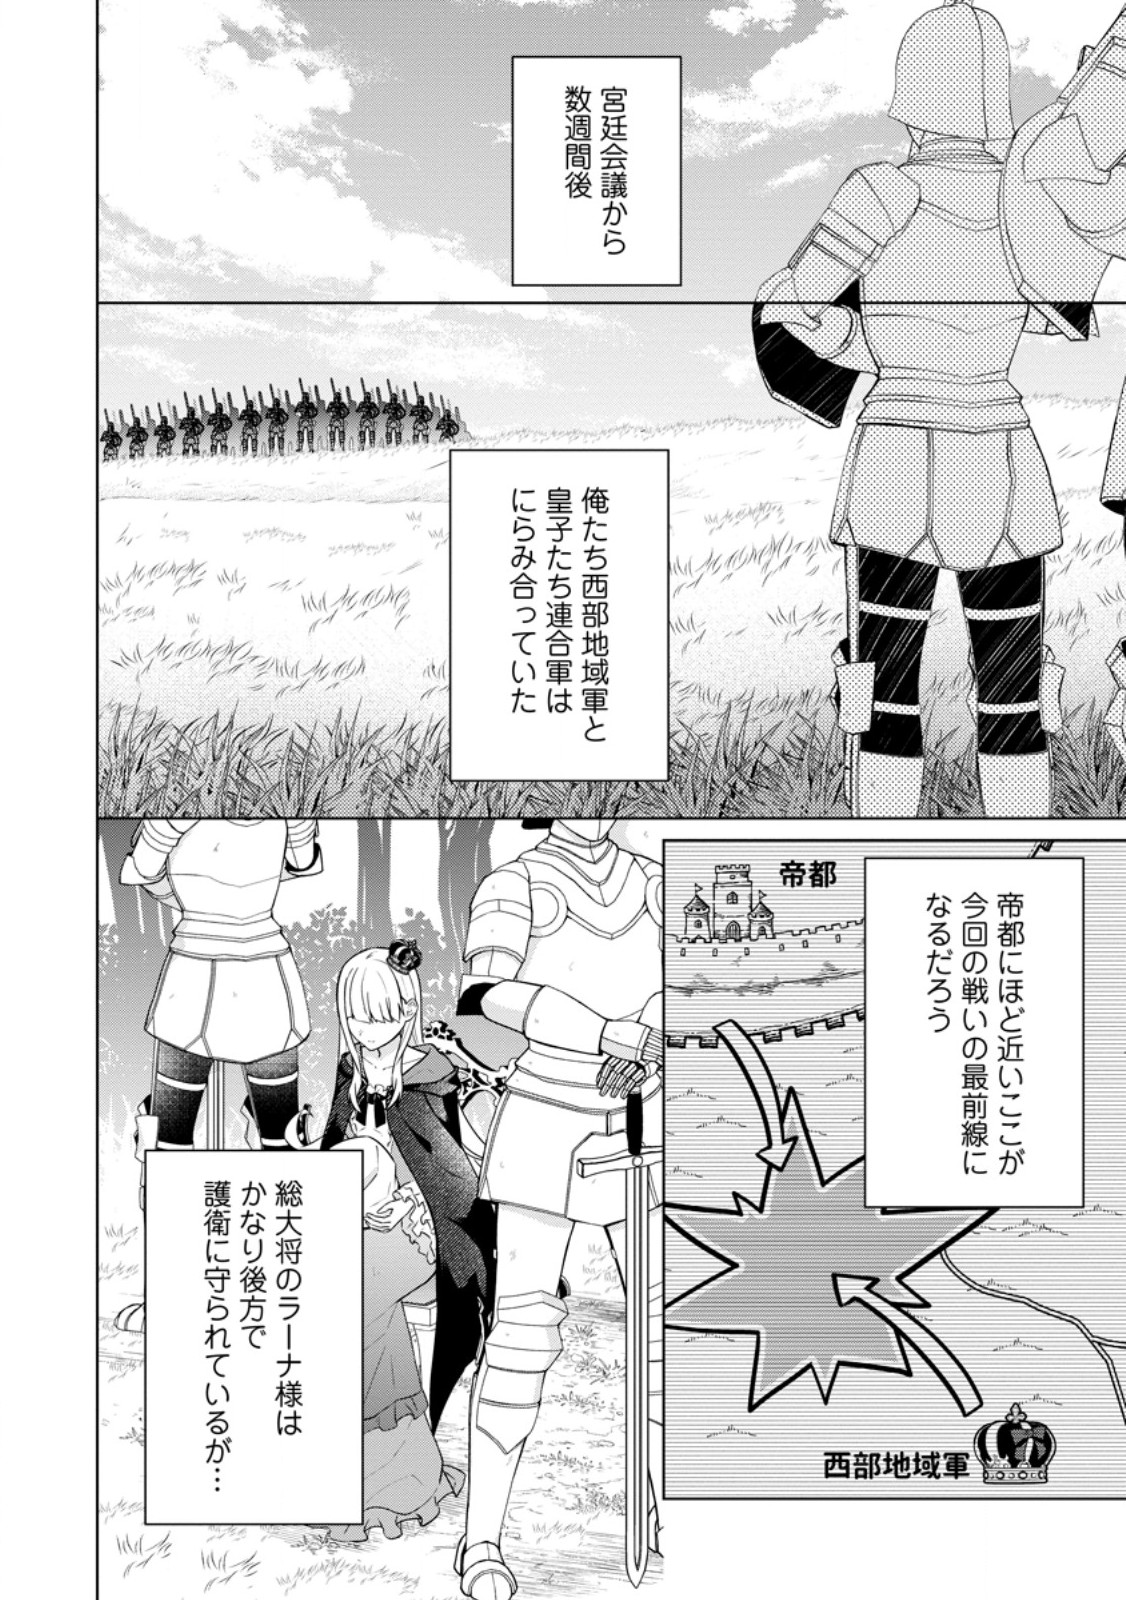 Shingan no Yuusha - Chapter 63.1 - Page 2